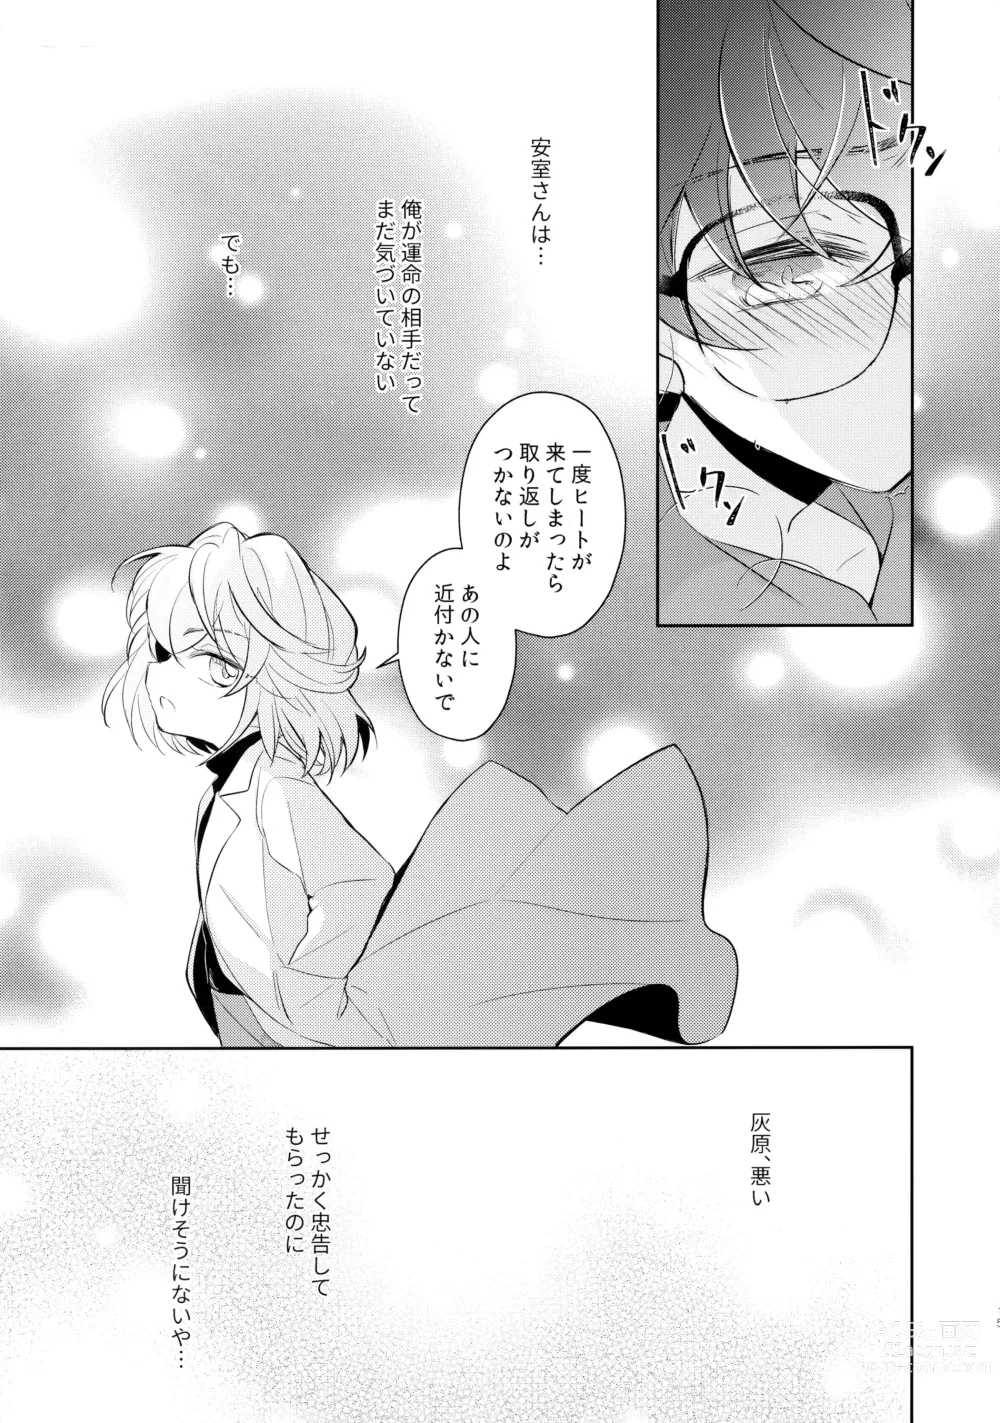 Page 15 of doujinshi Ecstasy